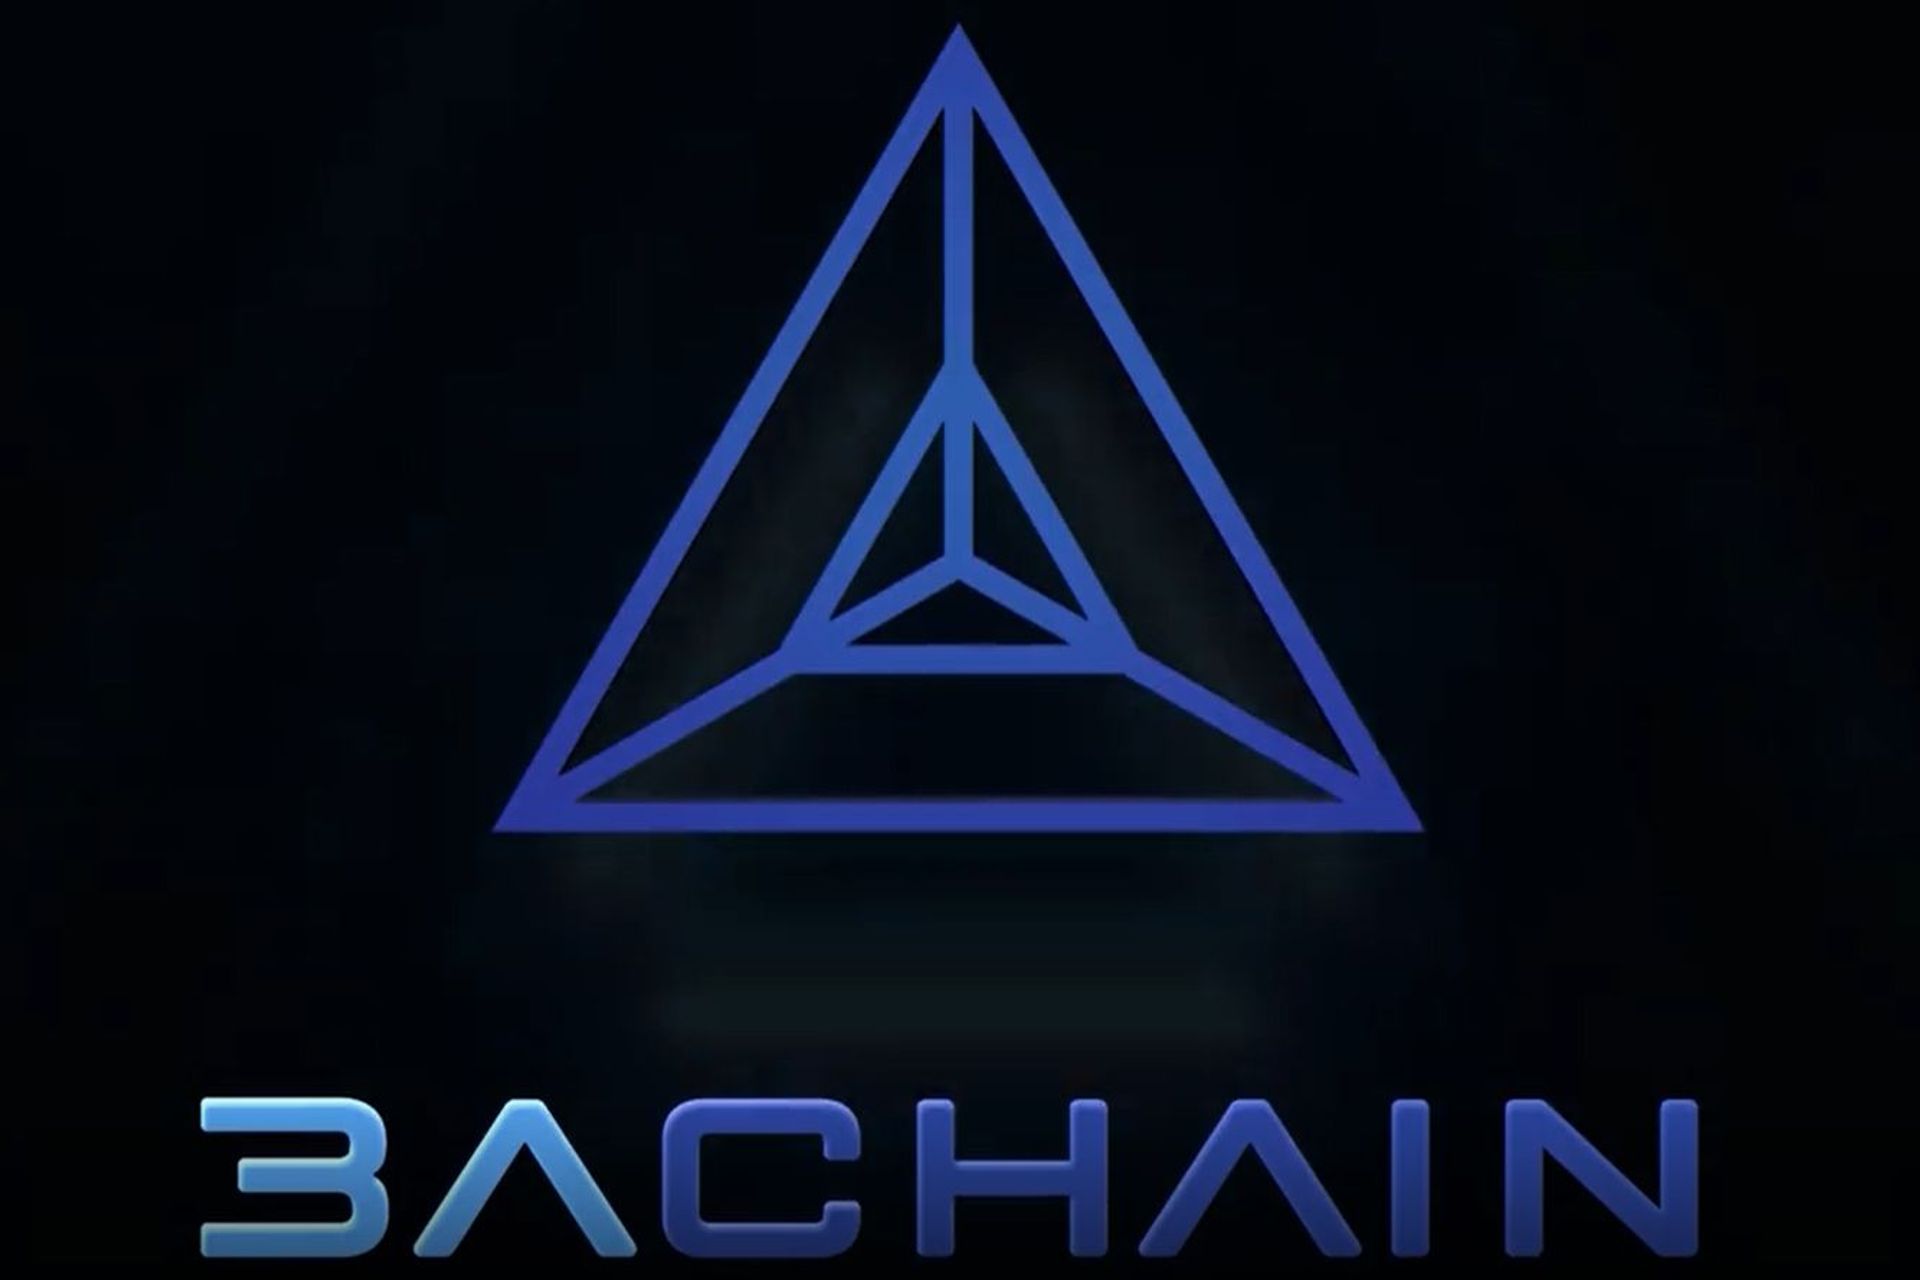 Logotip A3chain blockchaina koji je pokrenuo Grad Lugano